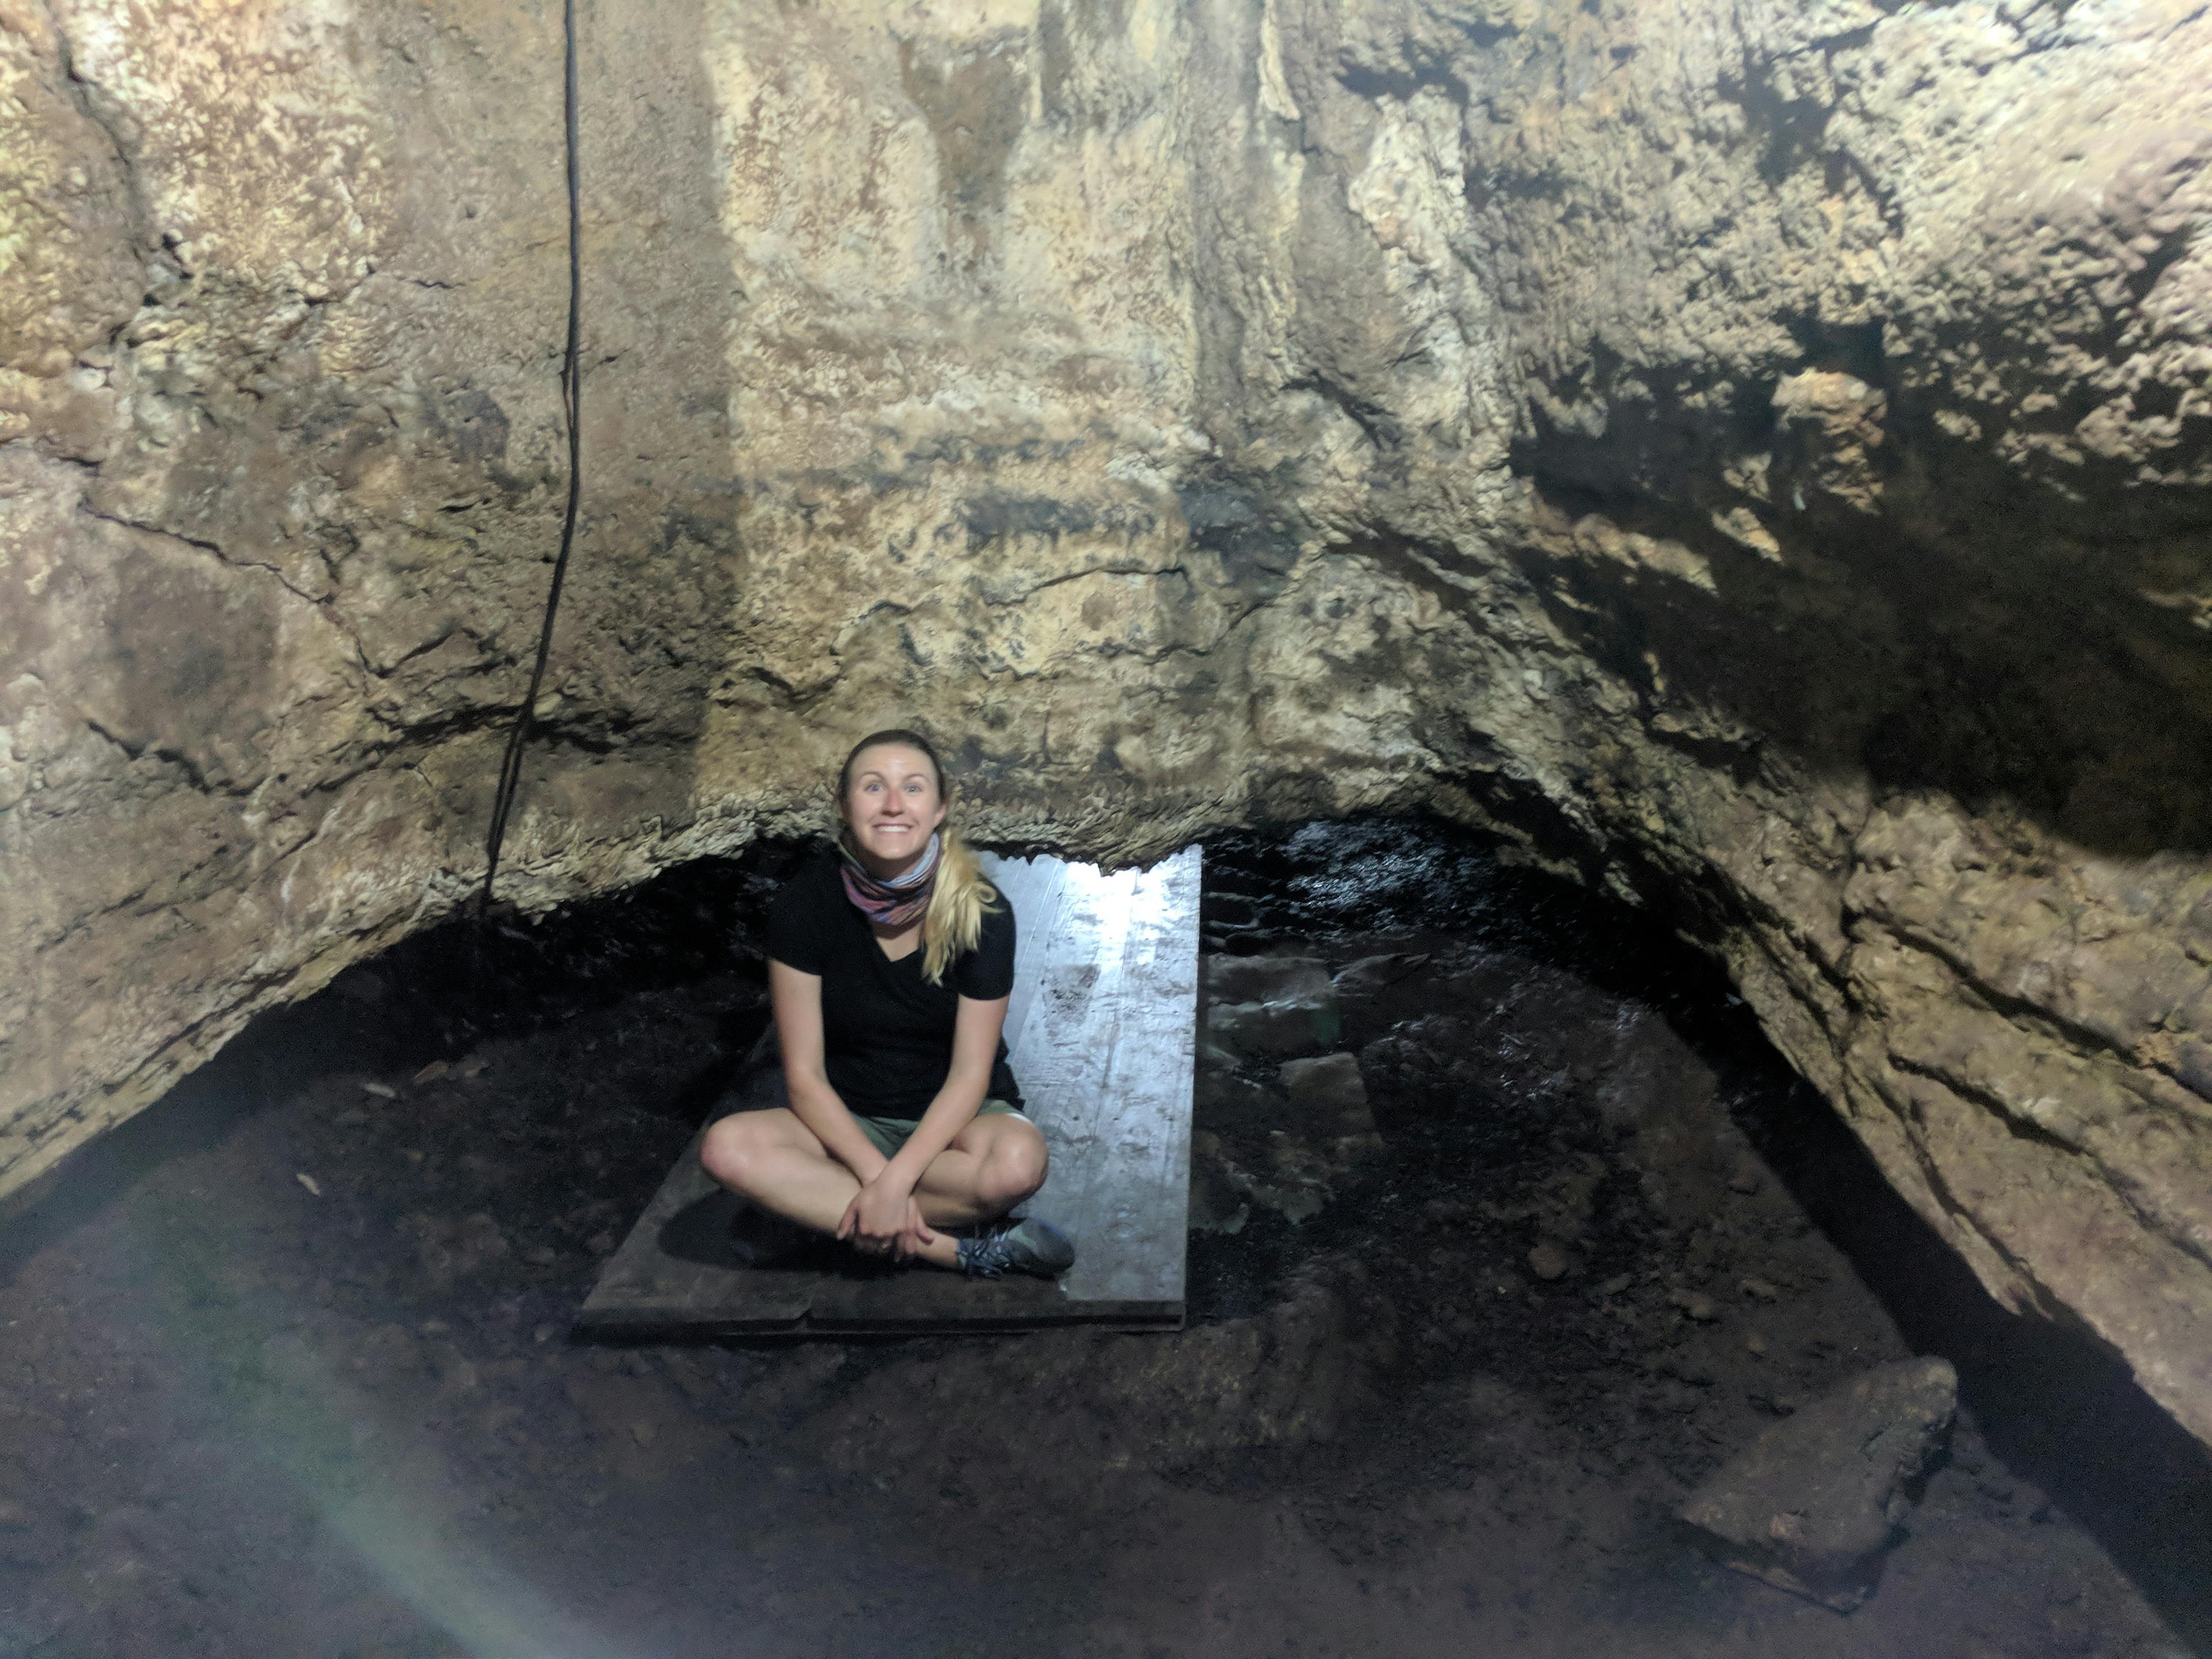 Lauren squeezing through the lava tunnels